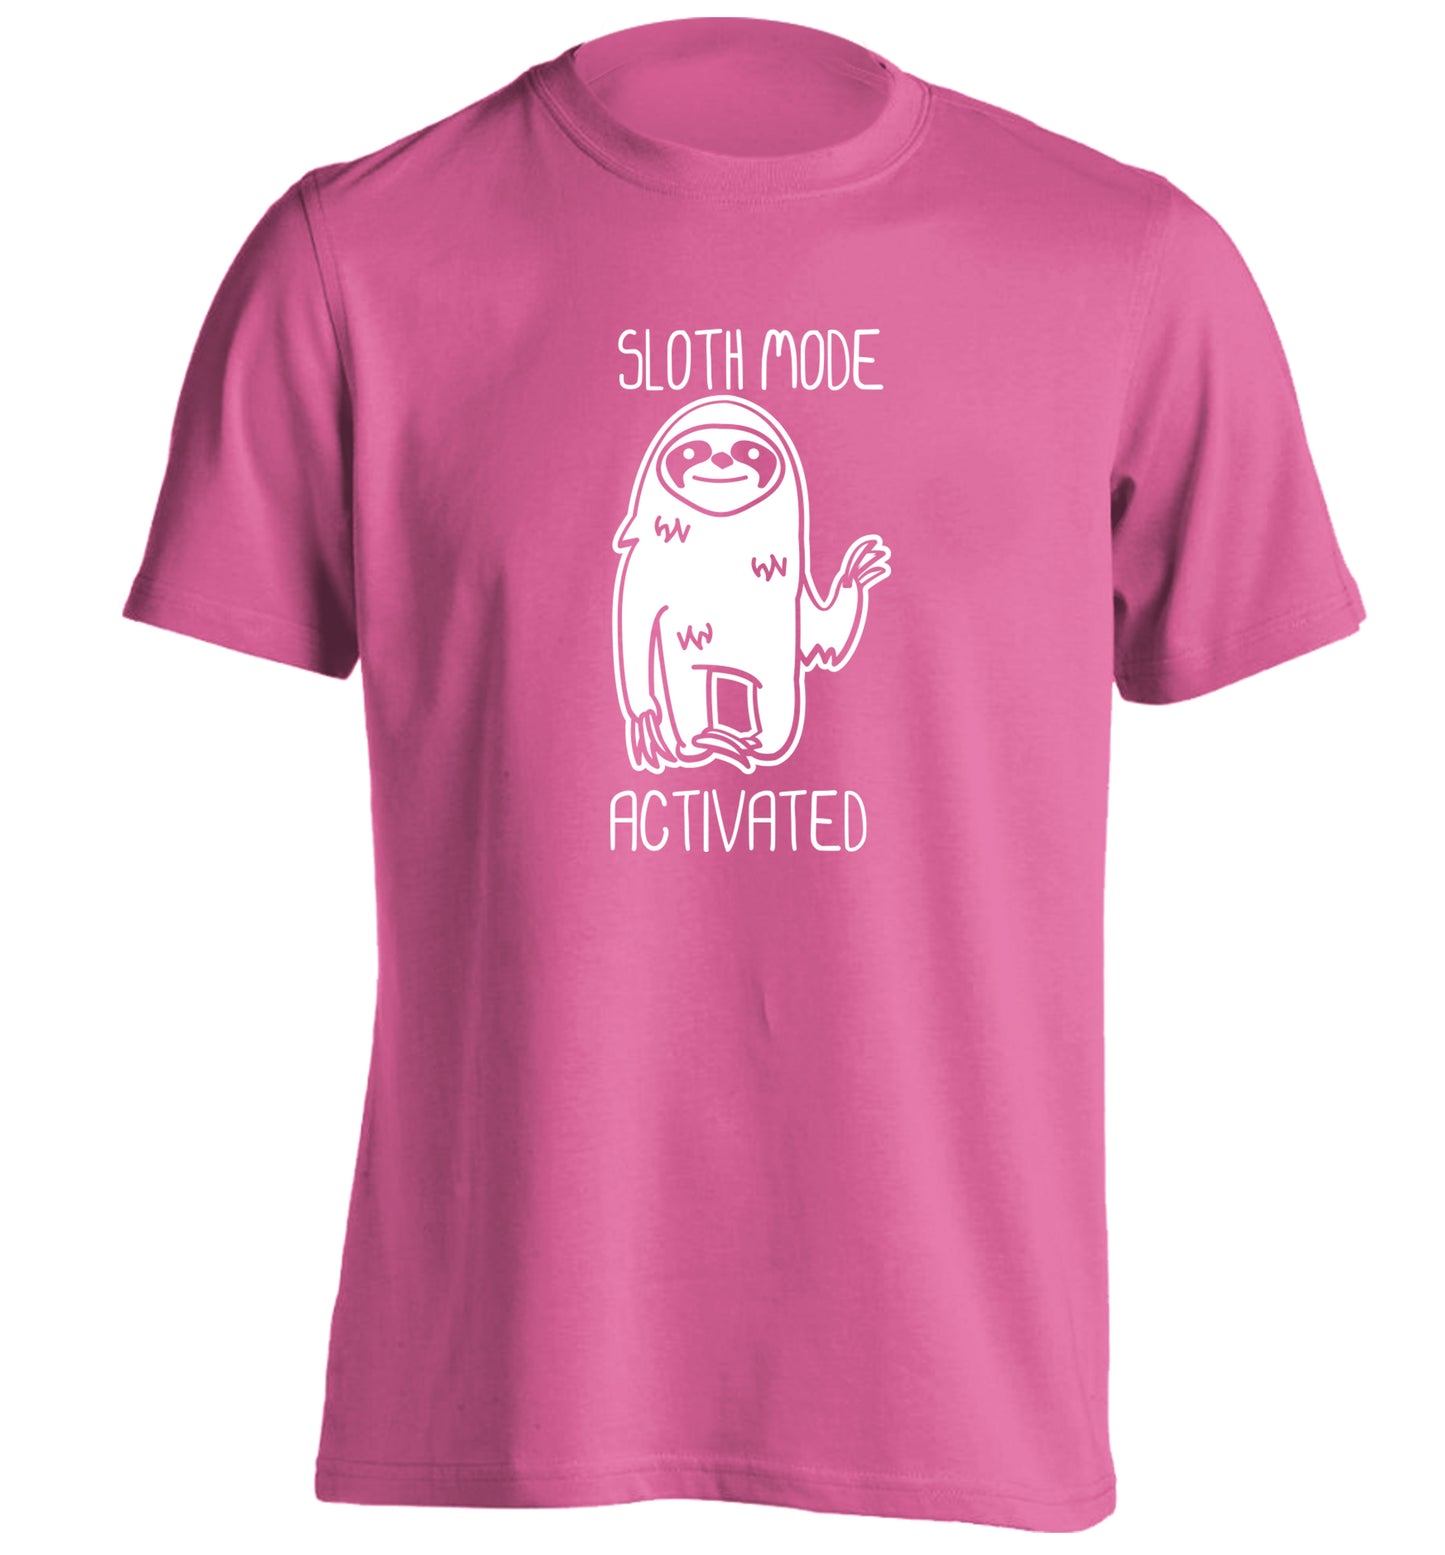 Sloth mode acitvated adults unisex pink Tshirt 2XL